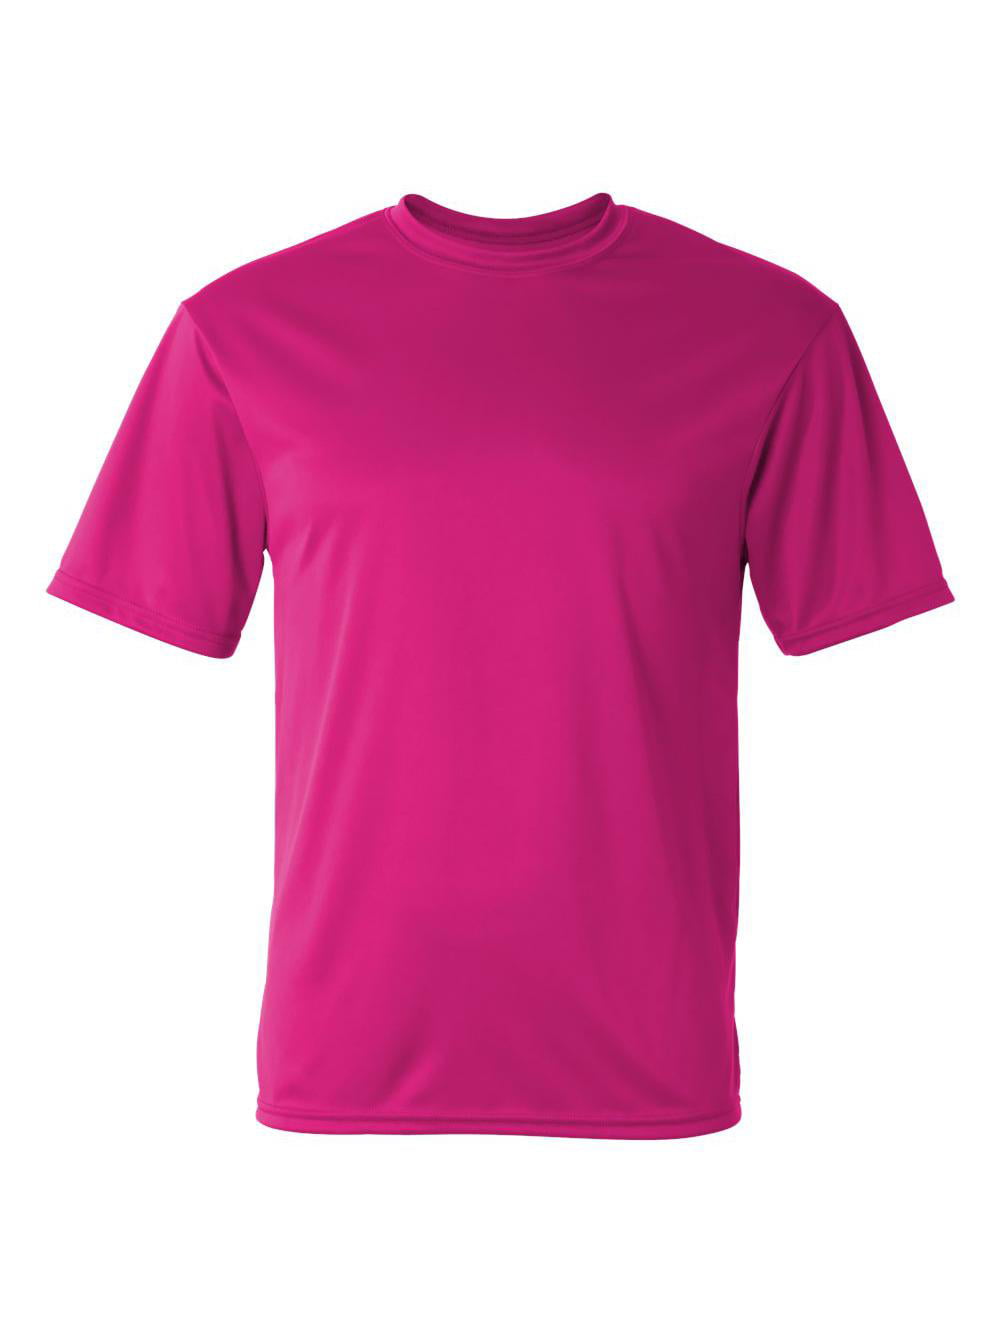 C2 Sport Performance T-Shirt - L / Hot Pink